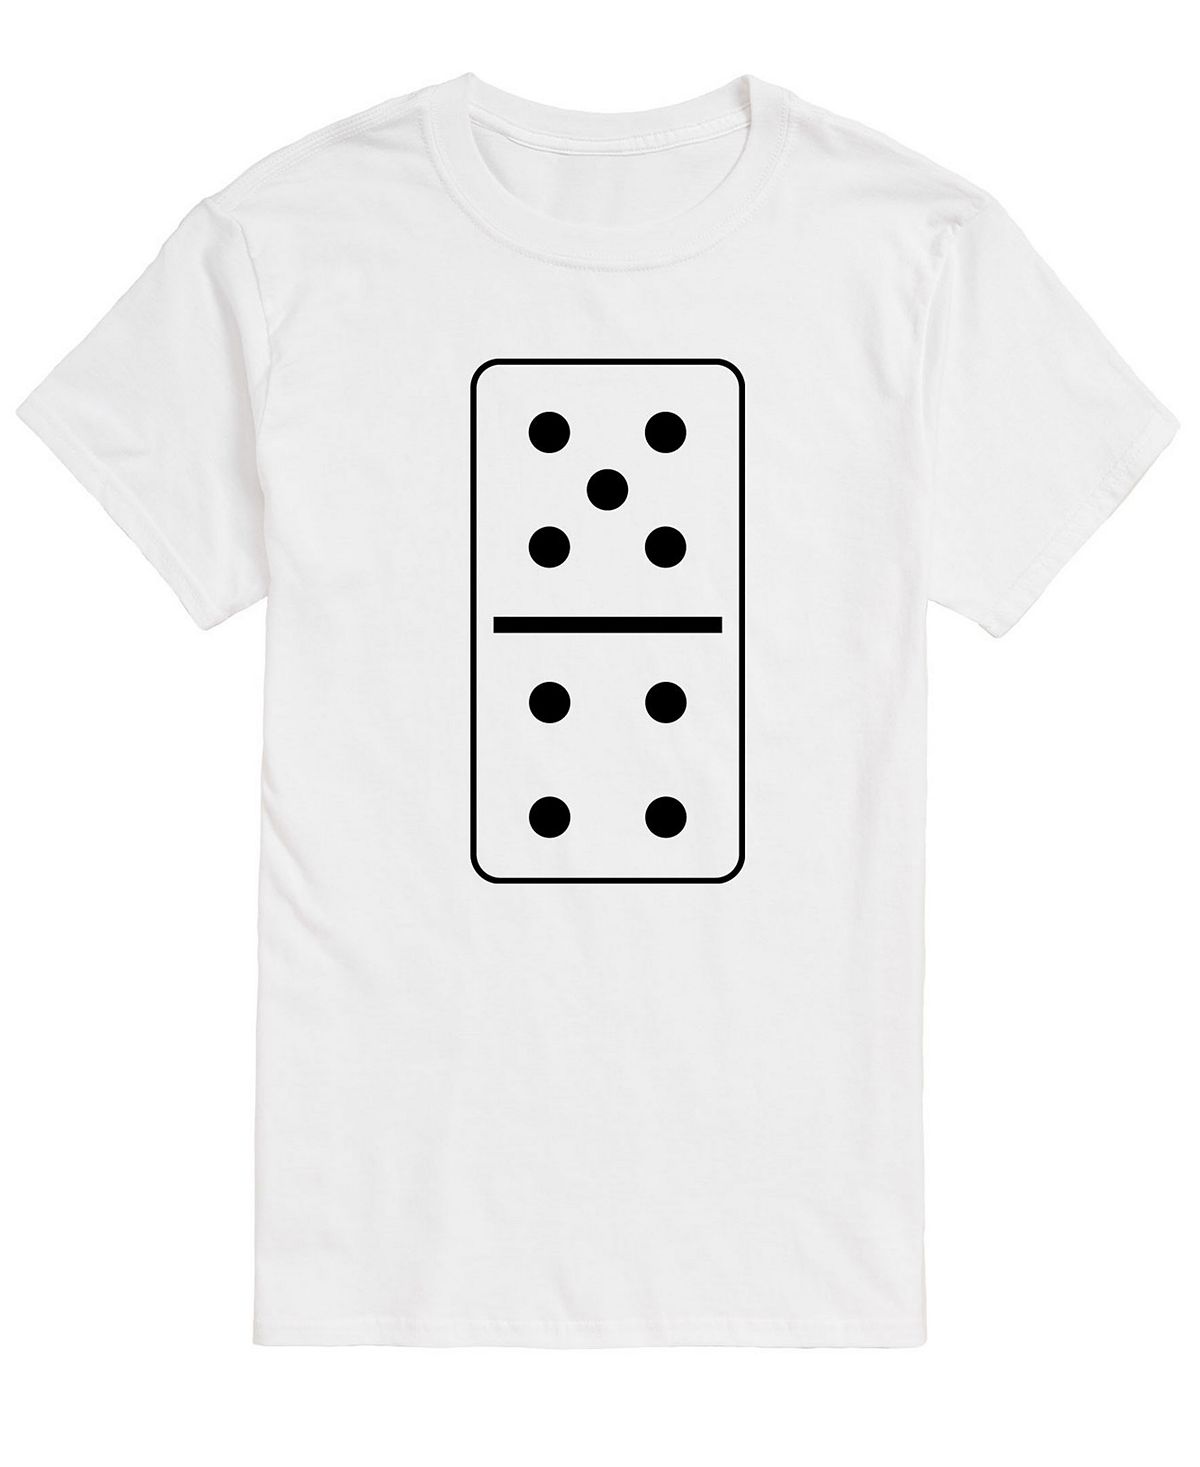 Мужская футболка классического кроя domino 2 AIRWAVES, белый